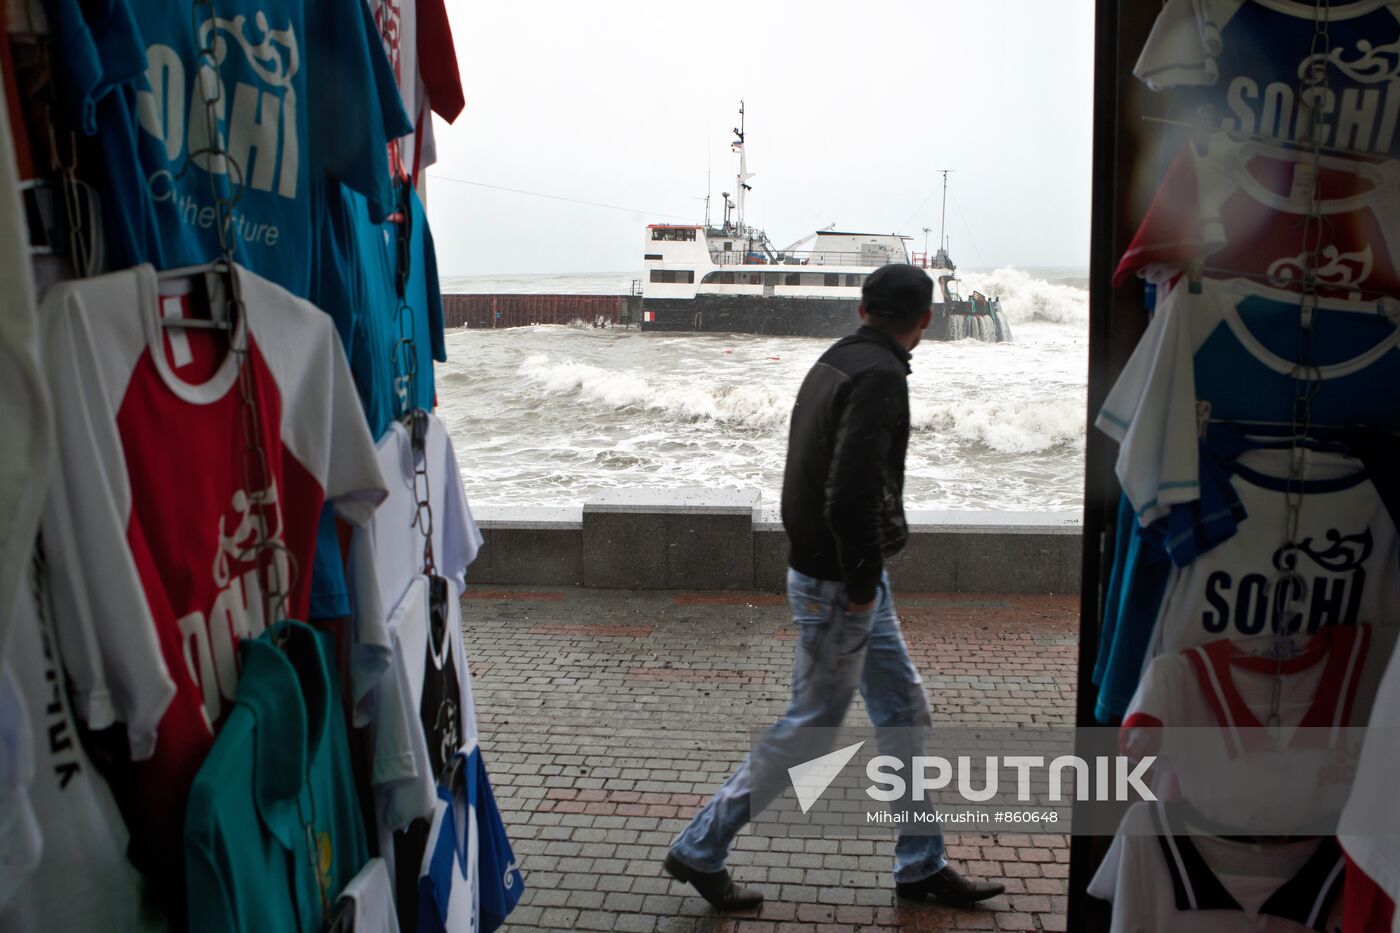 Storm wrecks Turkish bulk carrier off Black Sea coast near Sochi